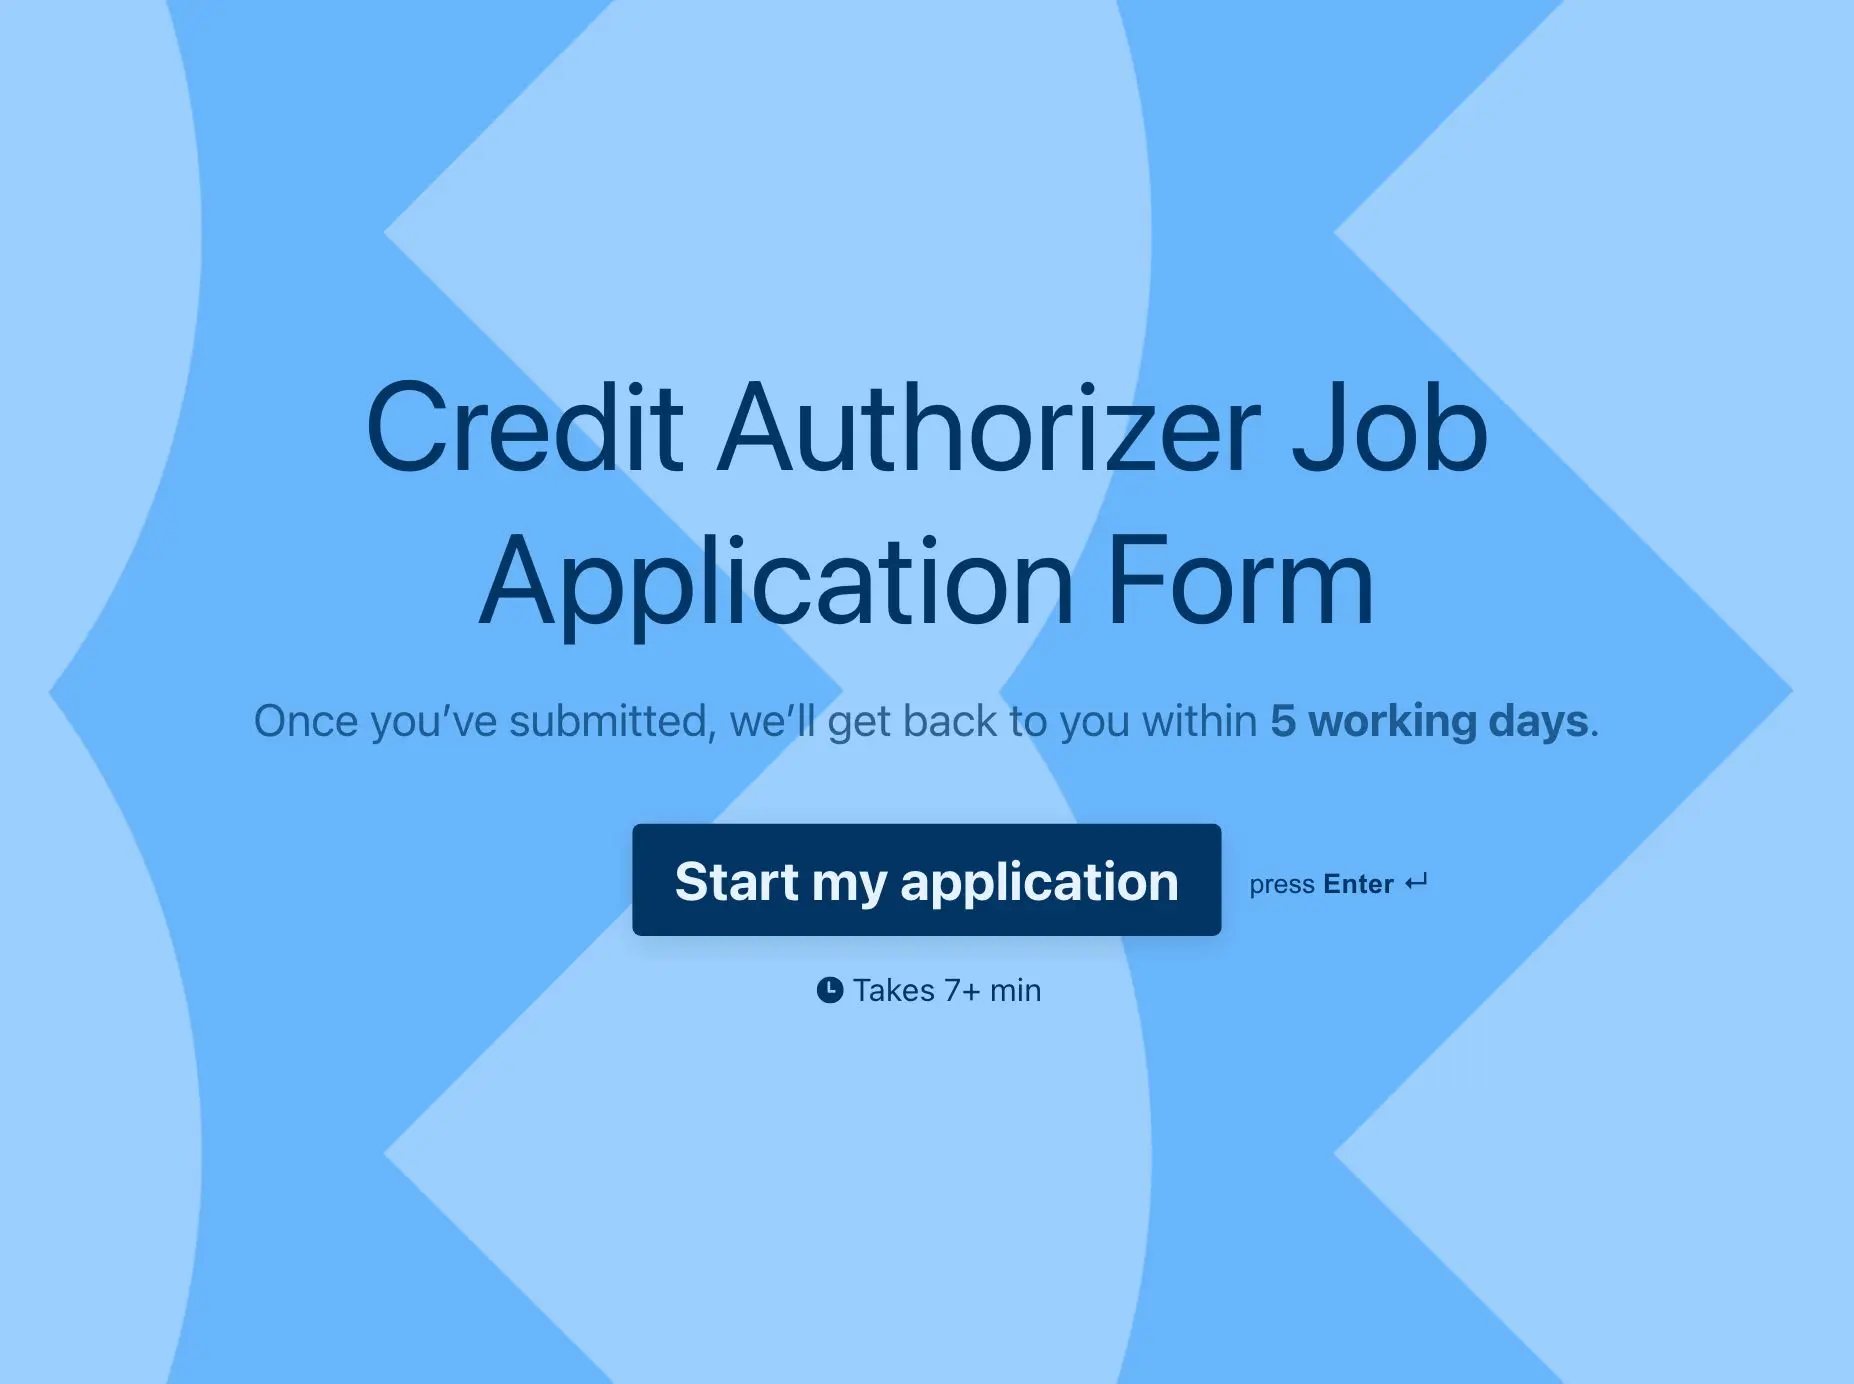 Credit Authorizer Job Application Form Template Hero